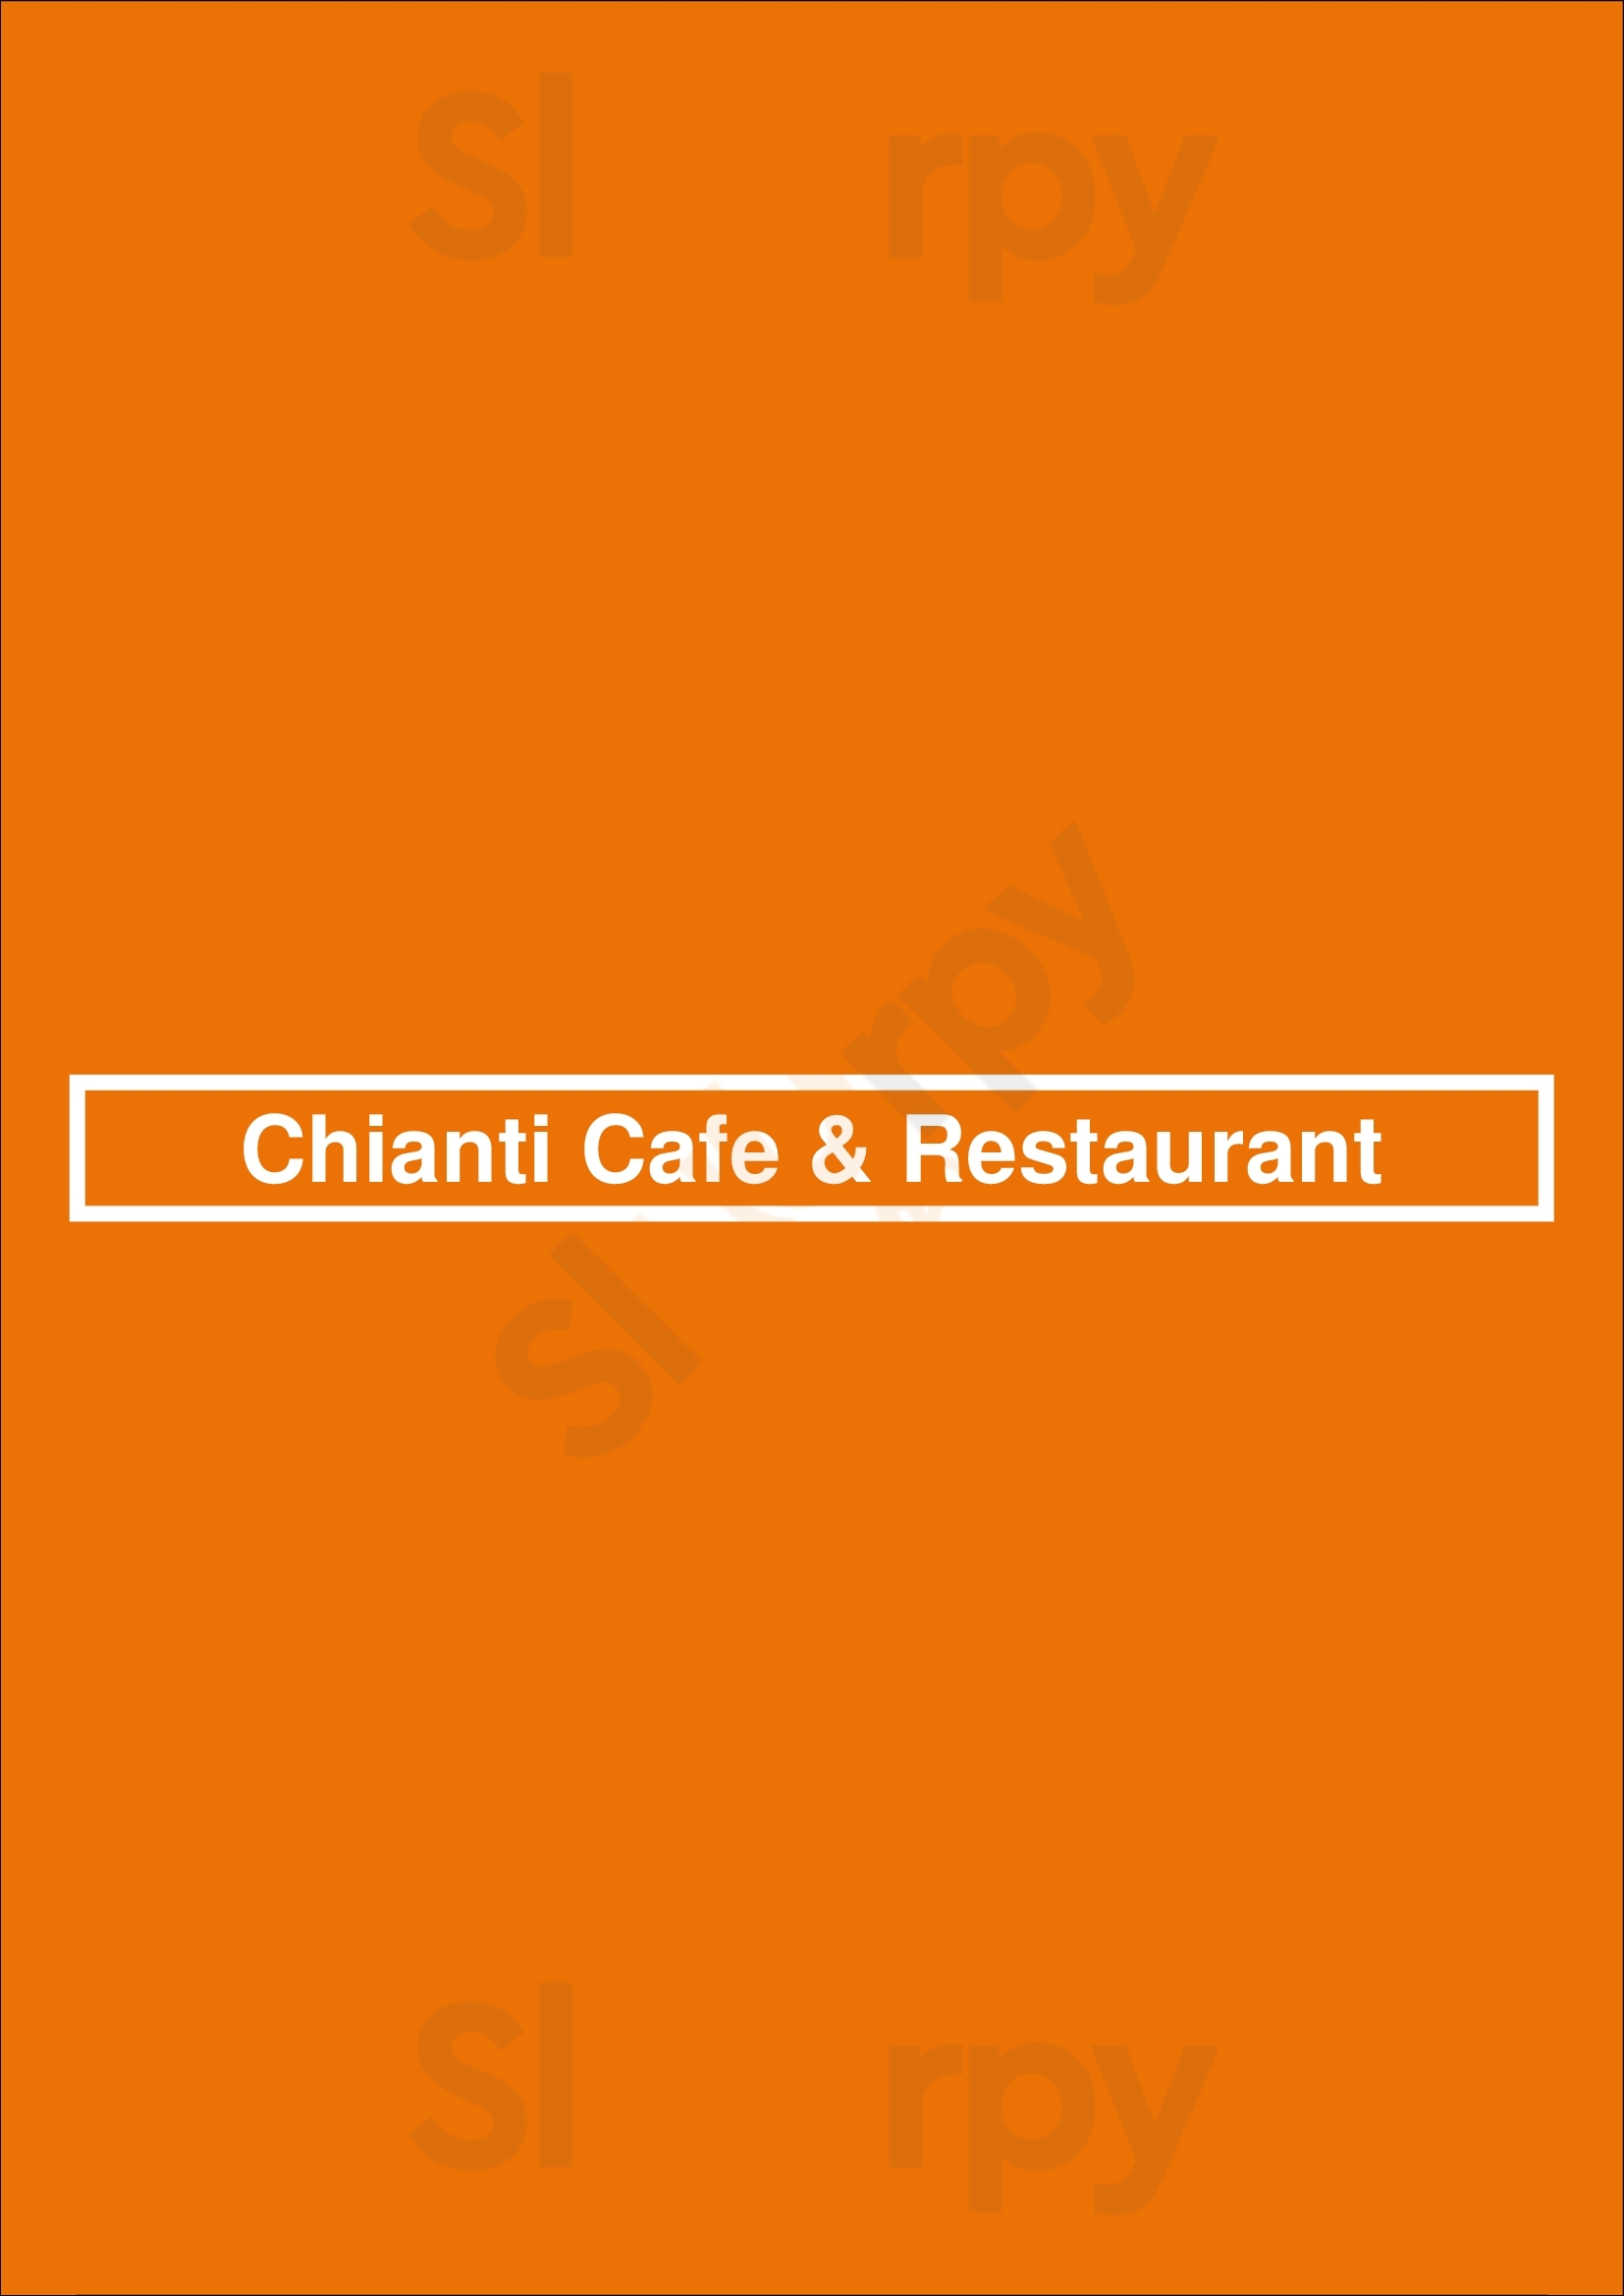 Chianti Cafe & Restaurant Edmonton Menu - 1